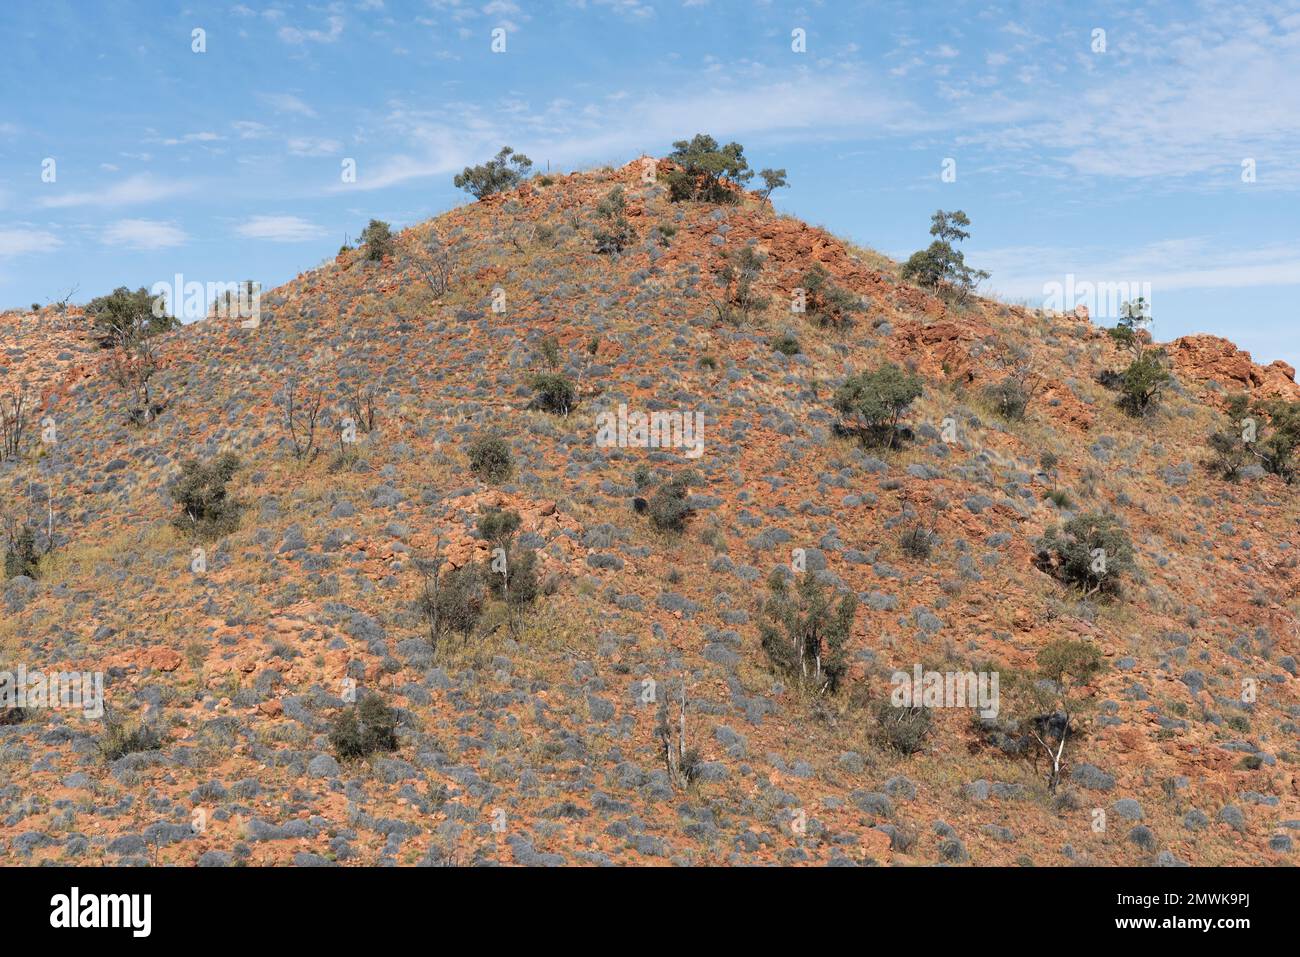 A beautiful view of a desert scene in Arkaroola, South Australia. Stock Photo